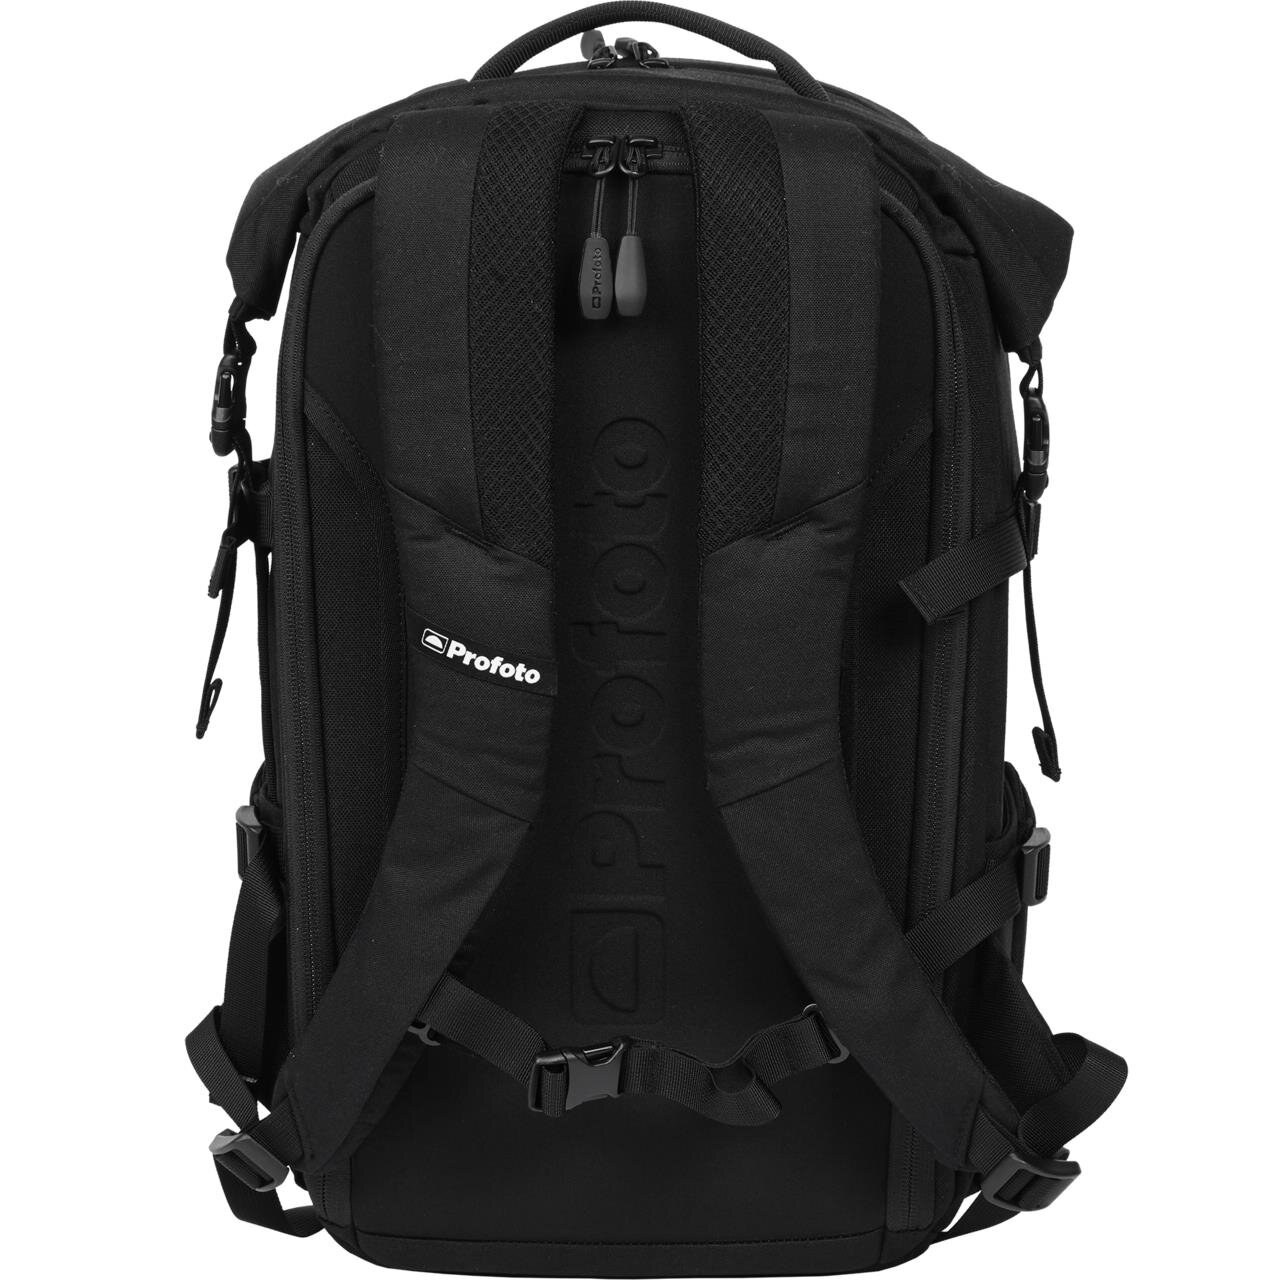 330241_b_profoto-core-backpack-s-back_productimage.png.jpeg